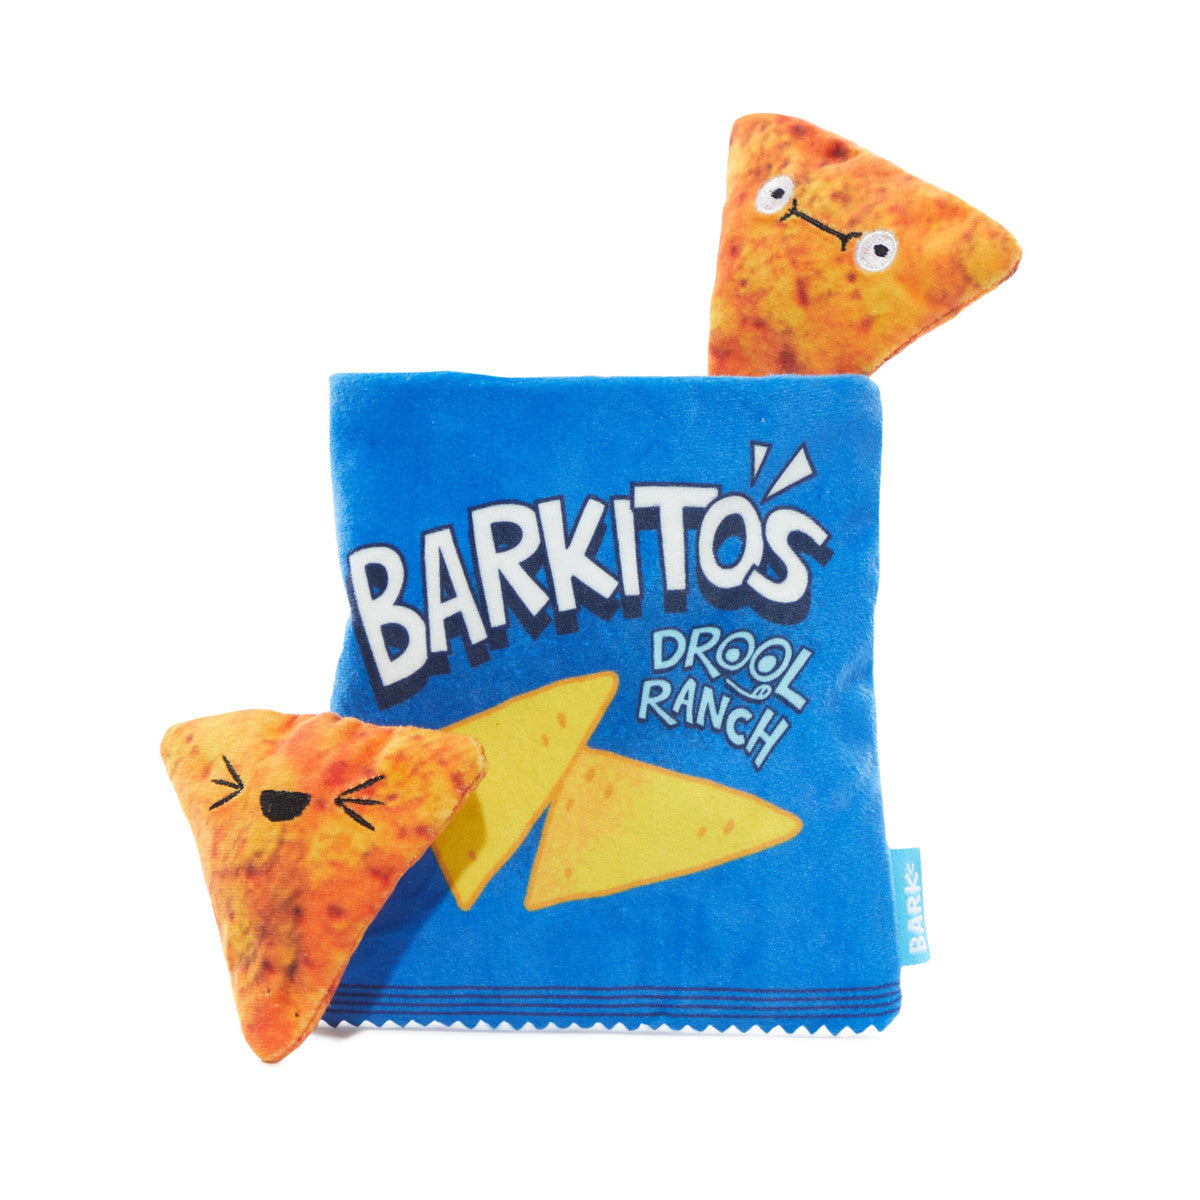 BARK Drool Ranch Chips